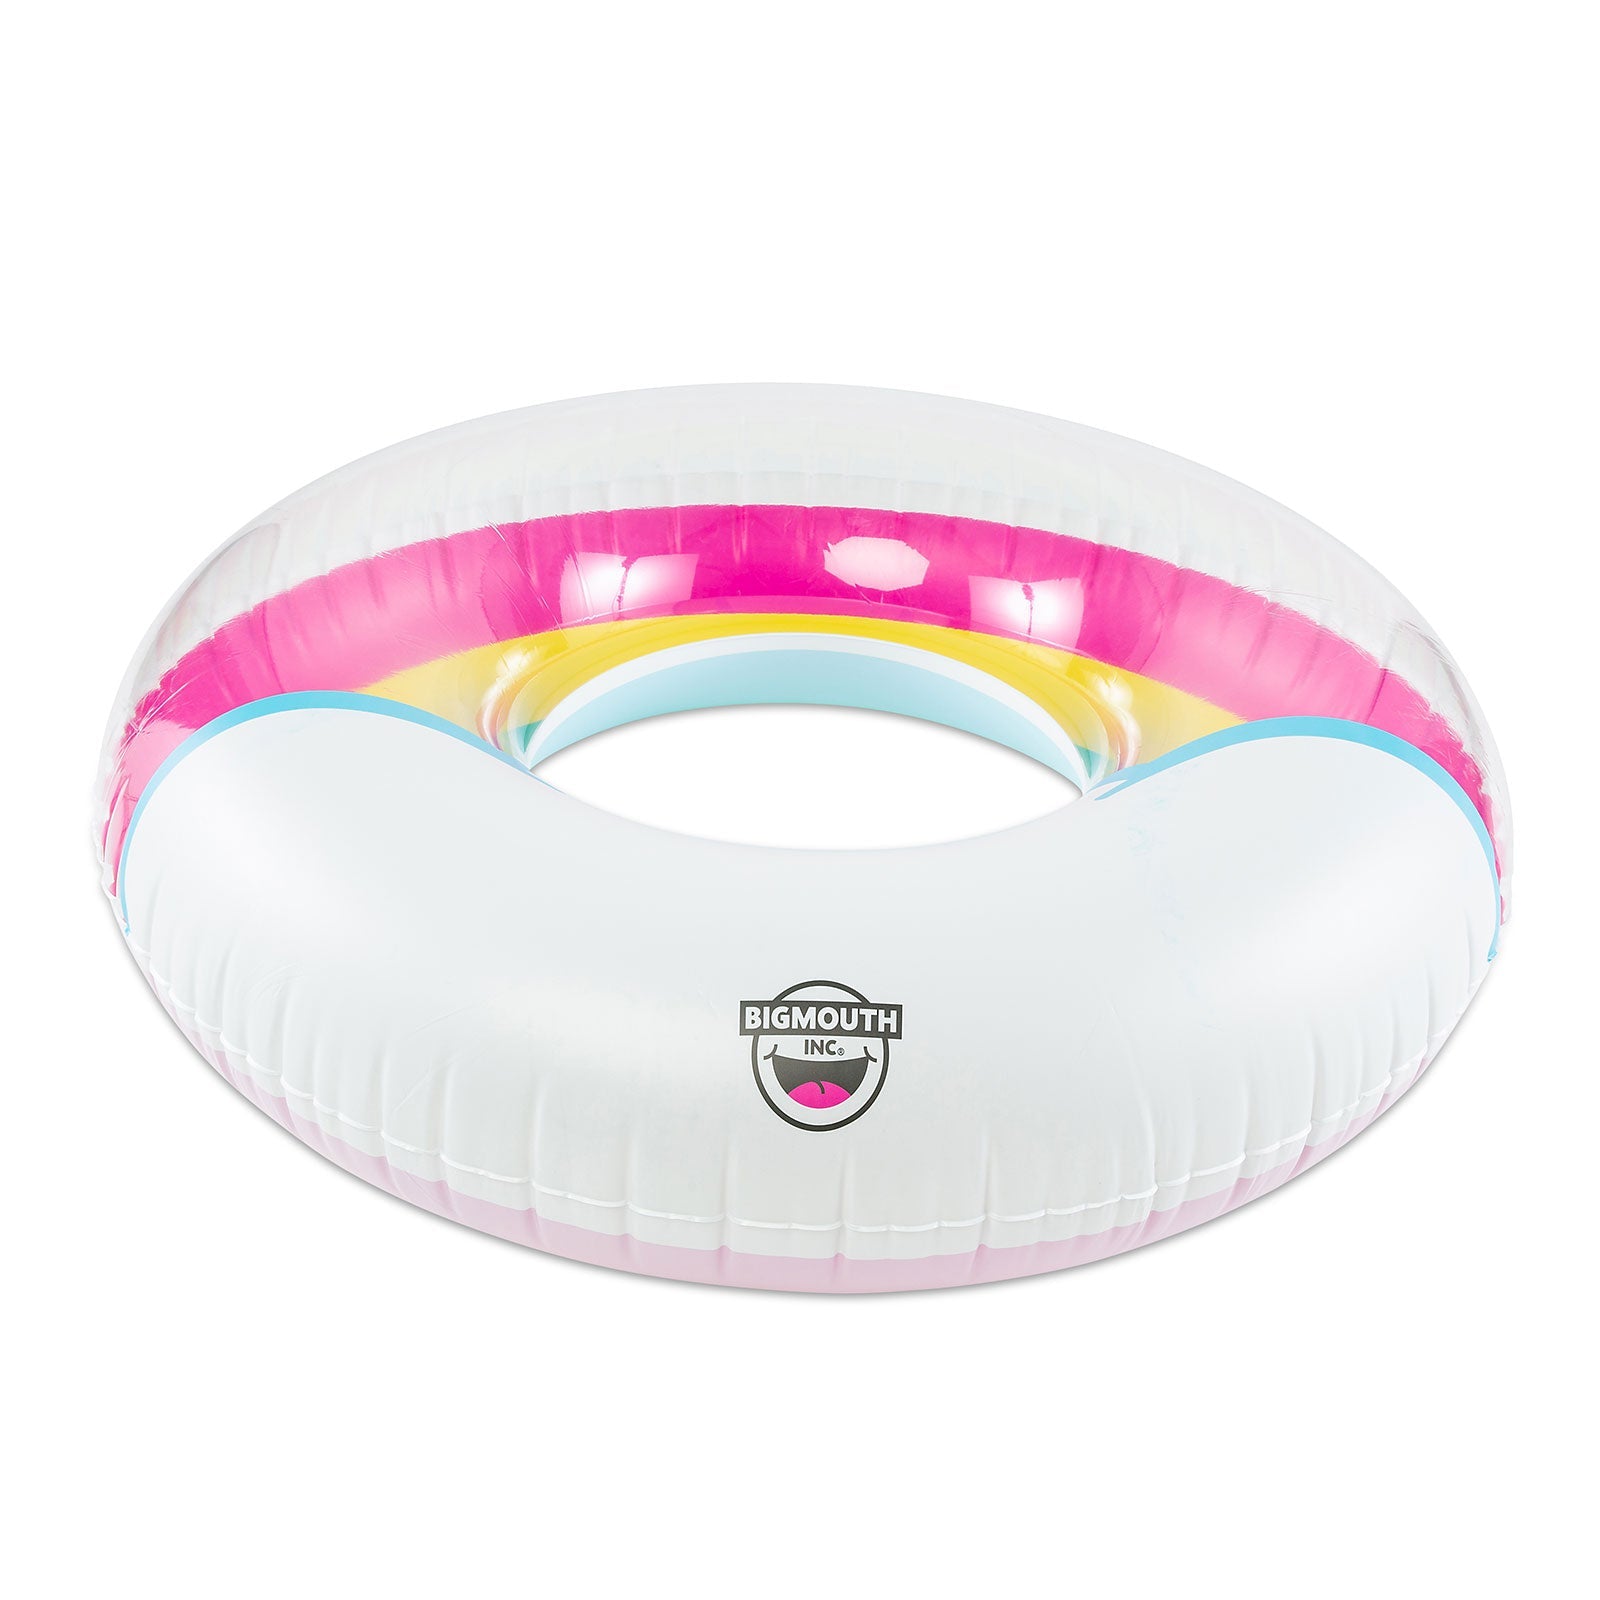 Rainbow Ring Float